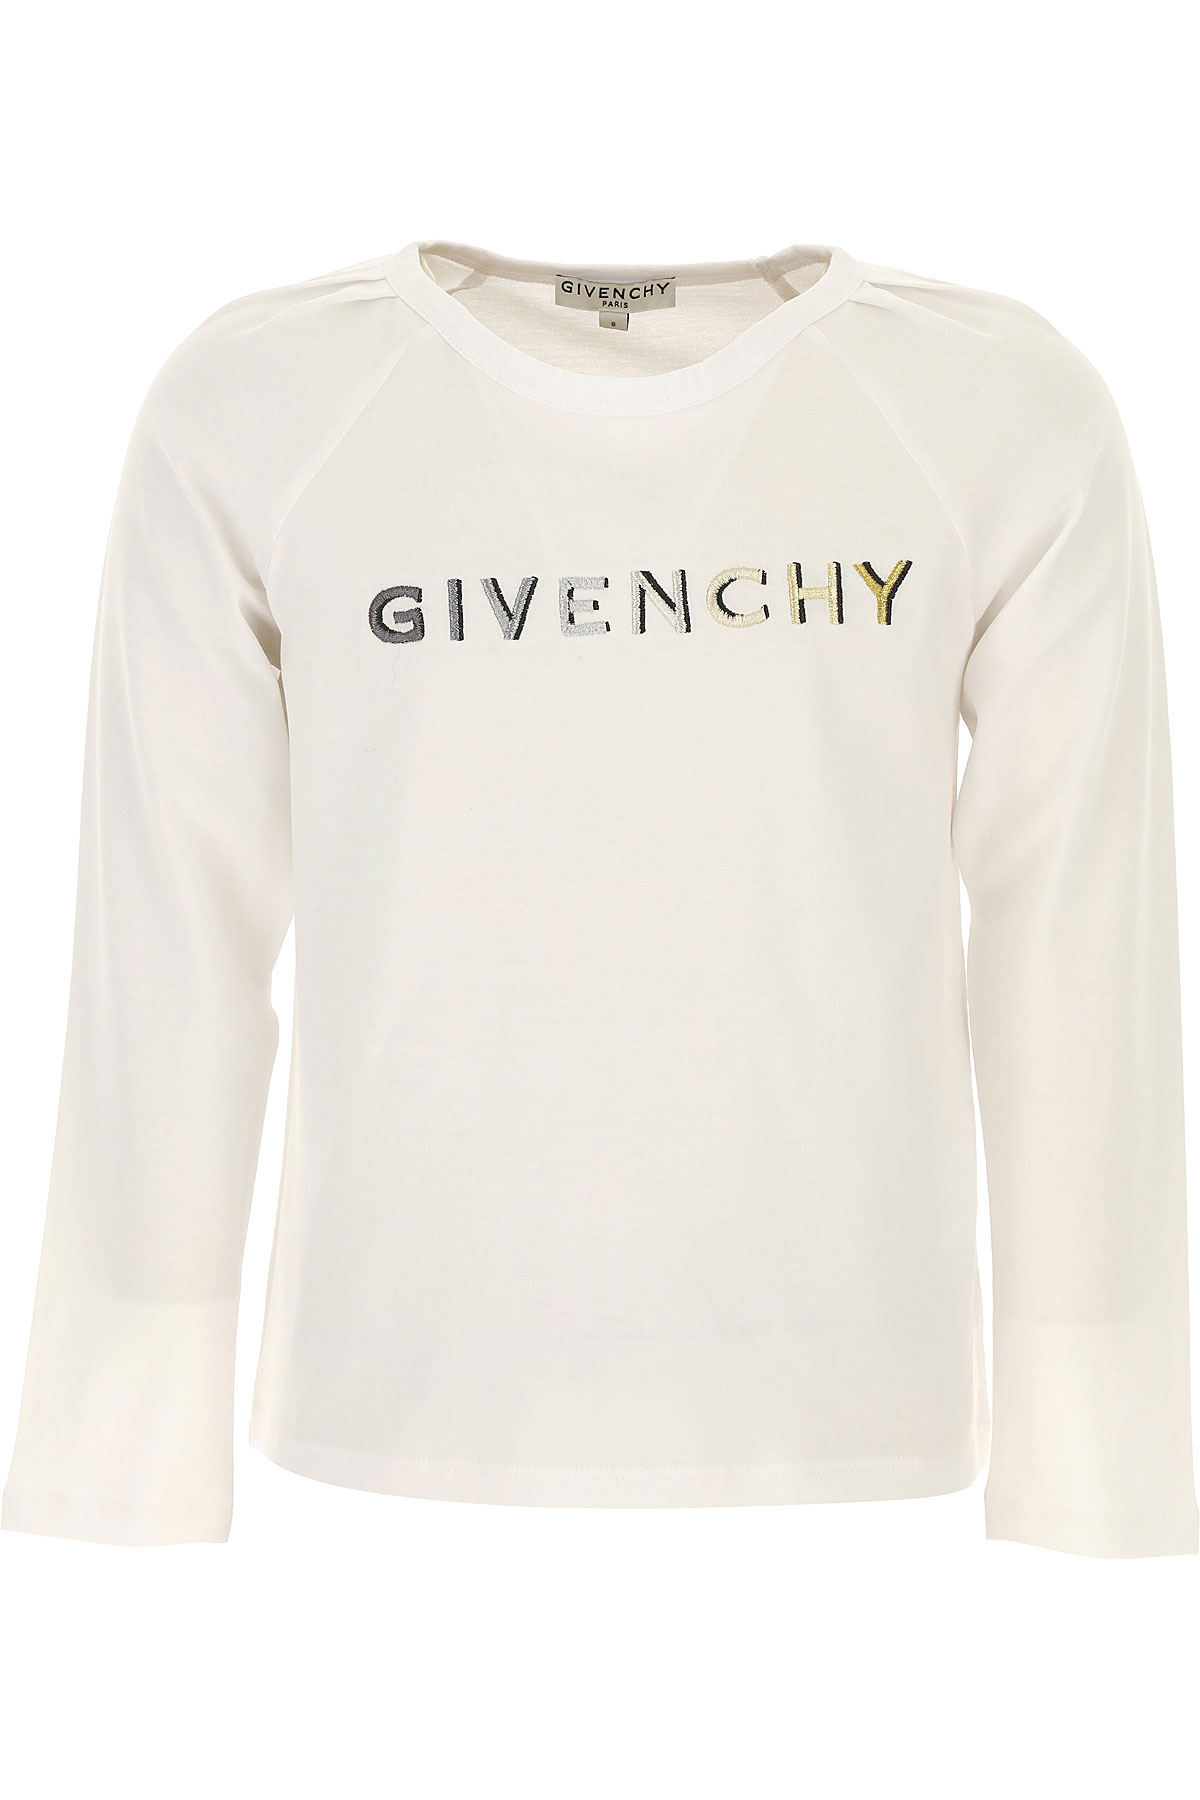 Girls Clothing Givenchy, Style code: h15180-10b-